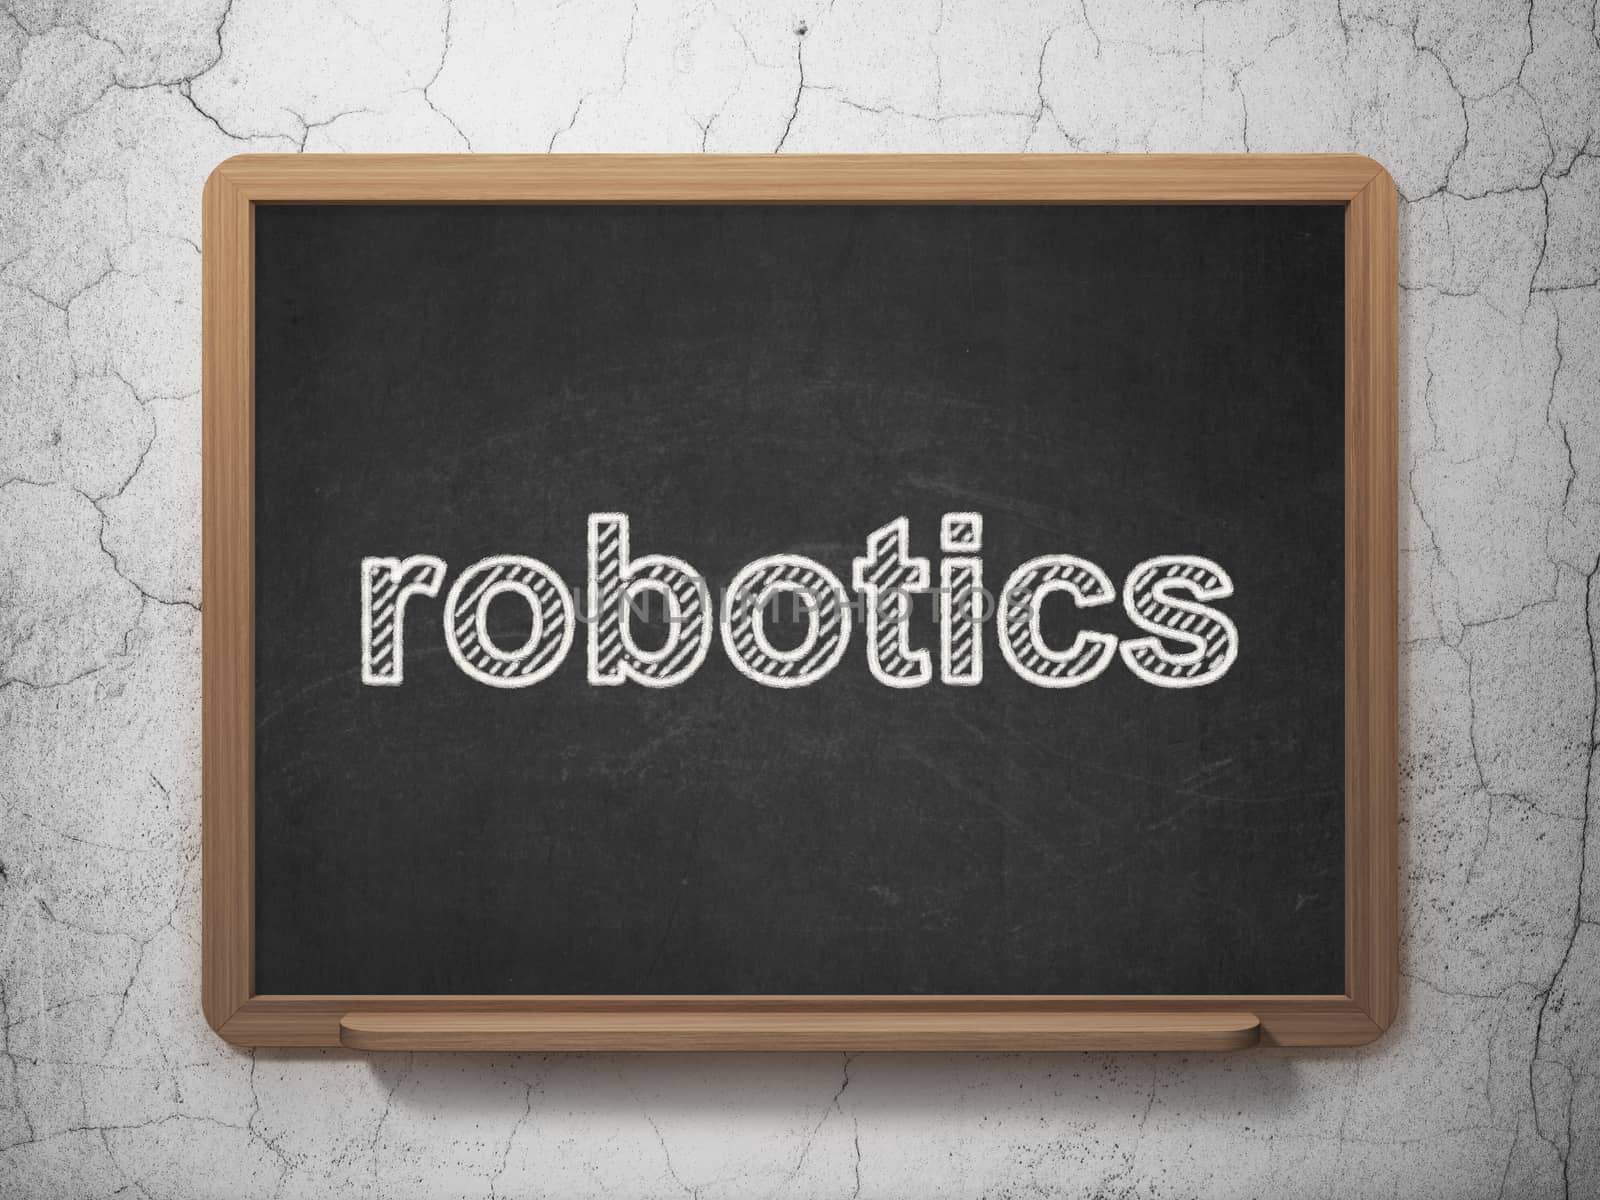 Science concept: Robotics on chalkboard background by maxkabakov